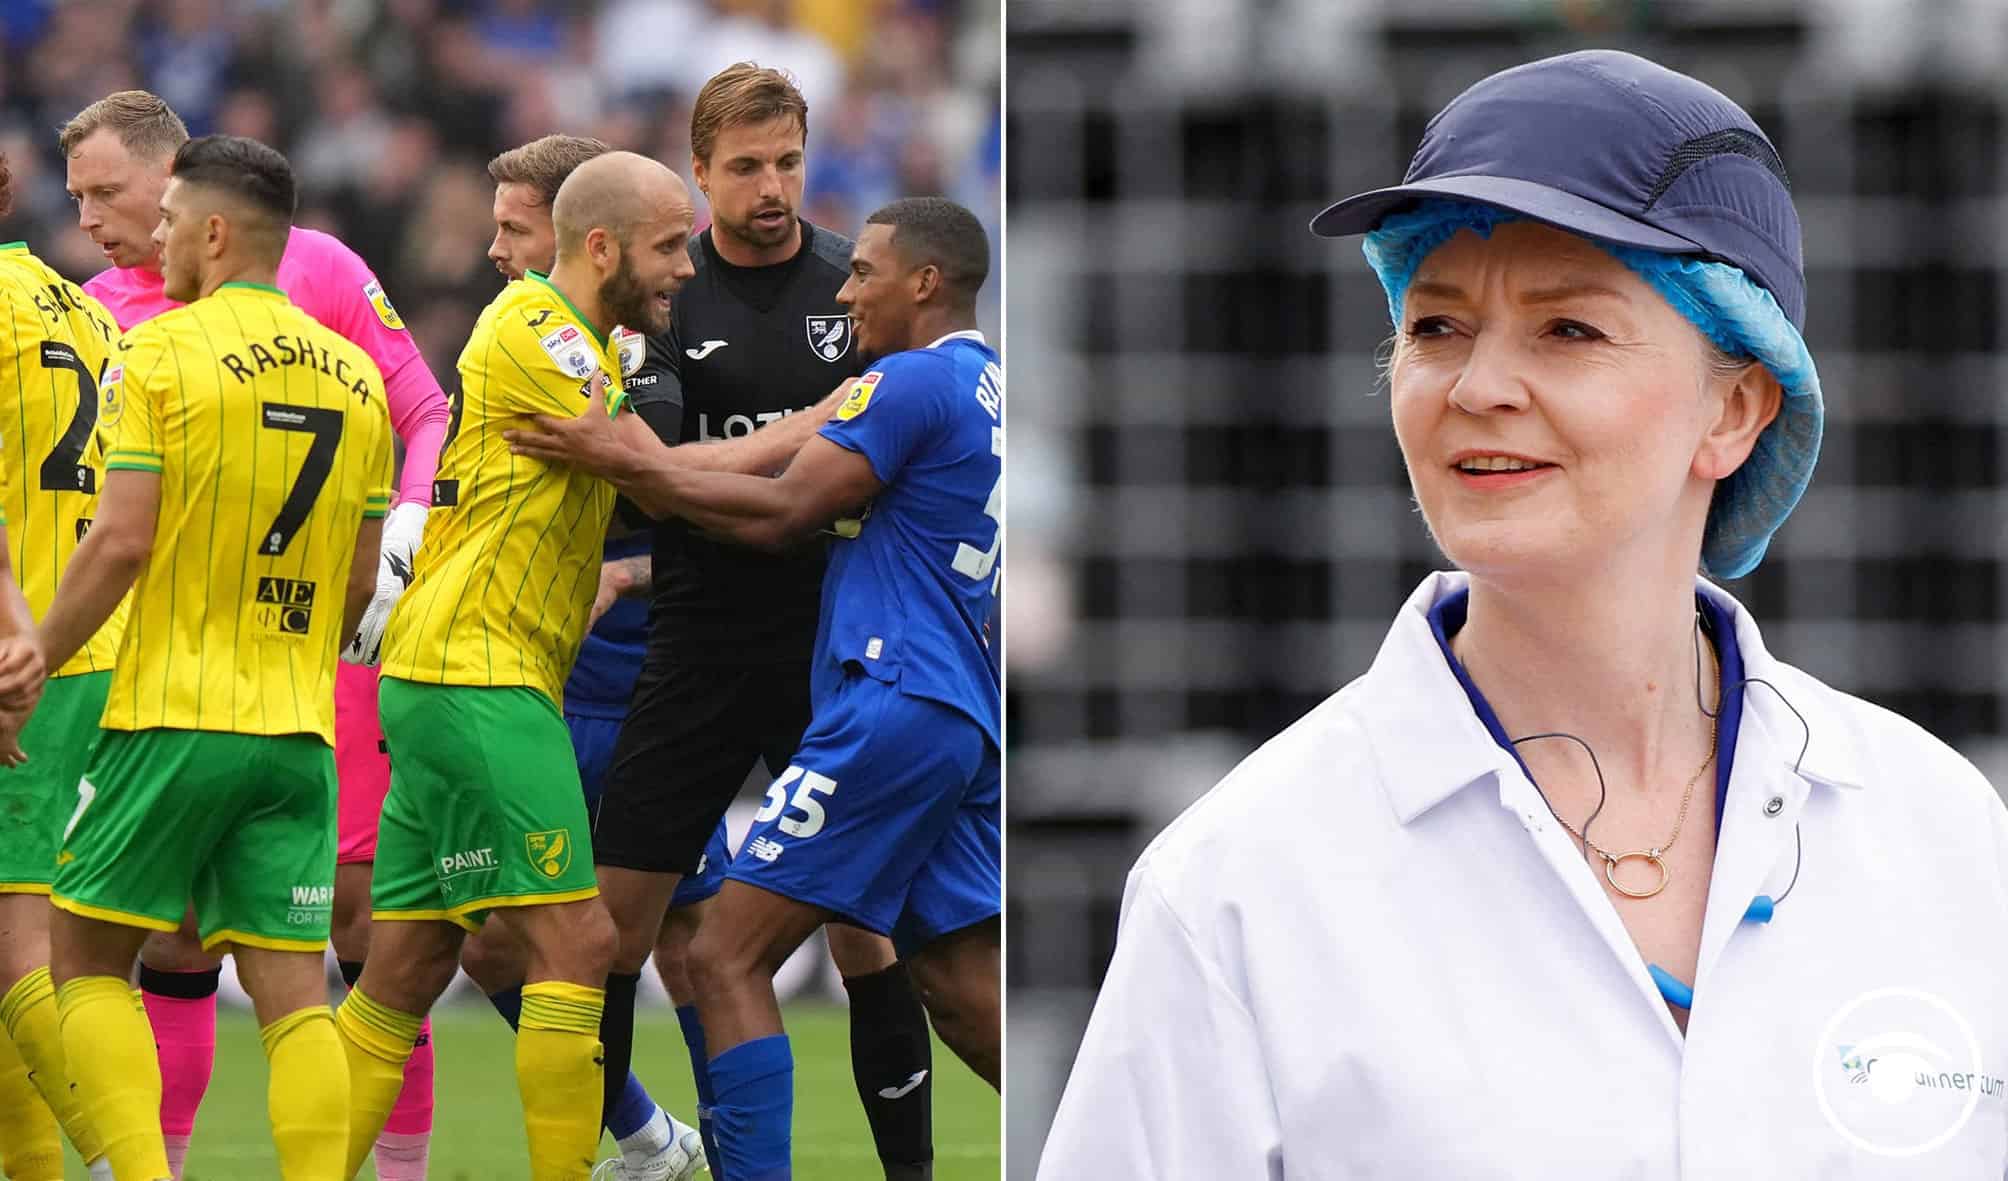 Liz Truss reveals she’s a Norwich City fan but wants to channel Leeds manager